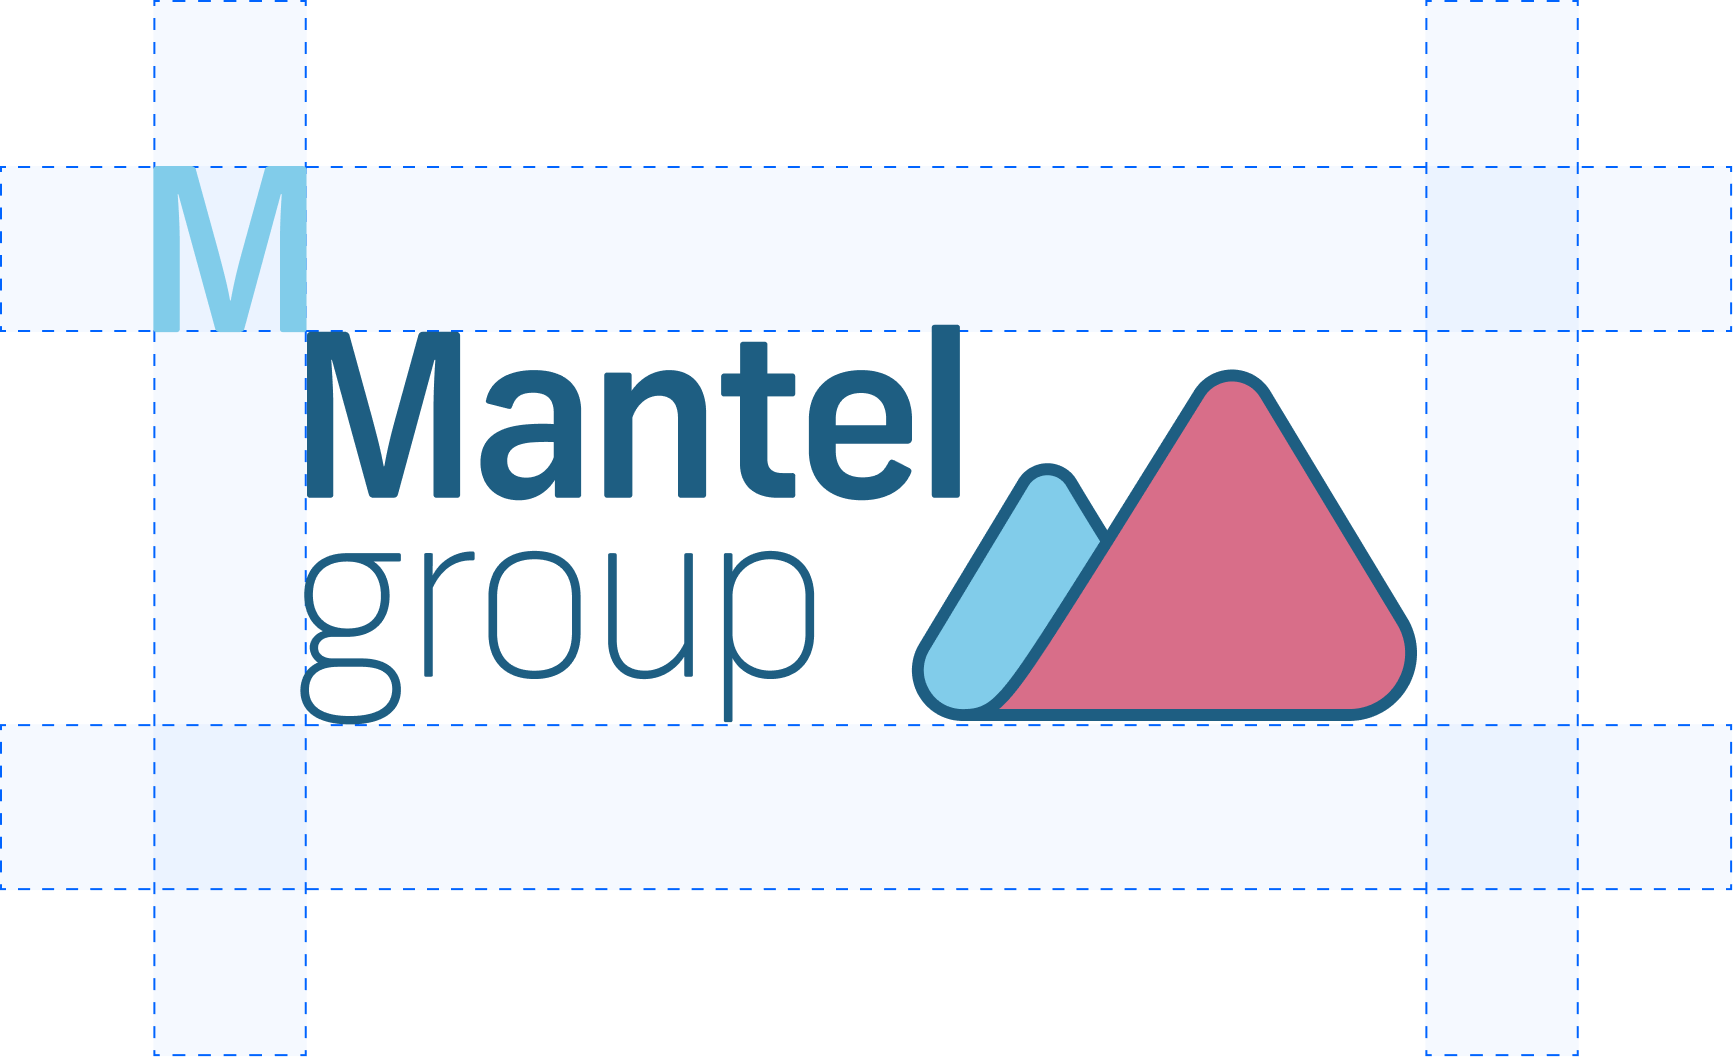 Mantel group logo – figma version